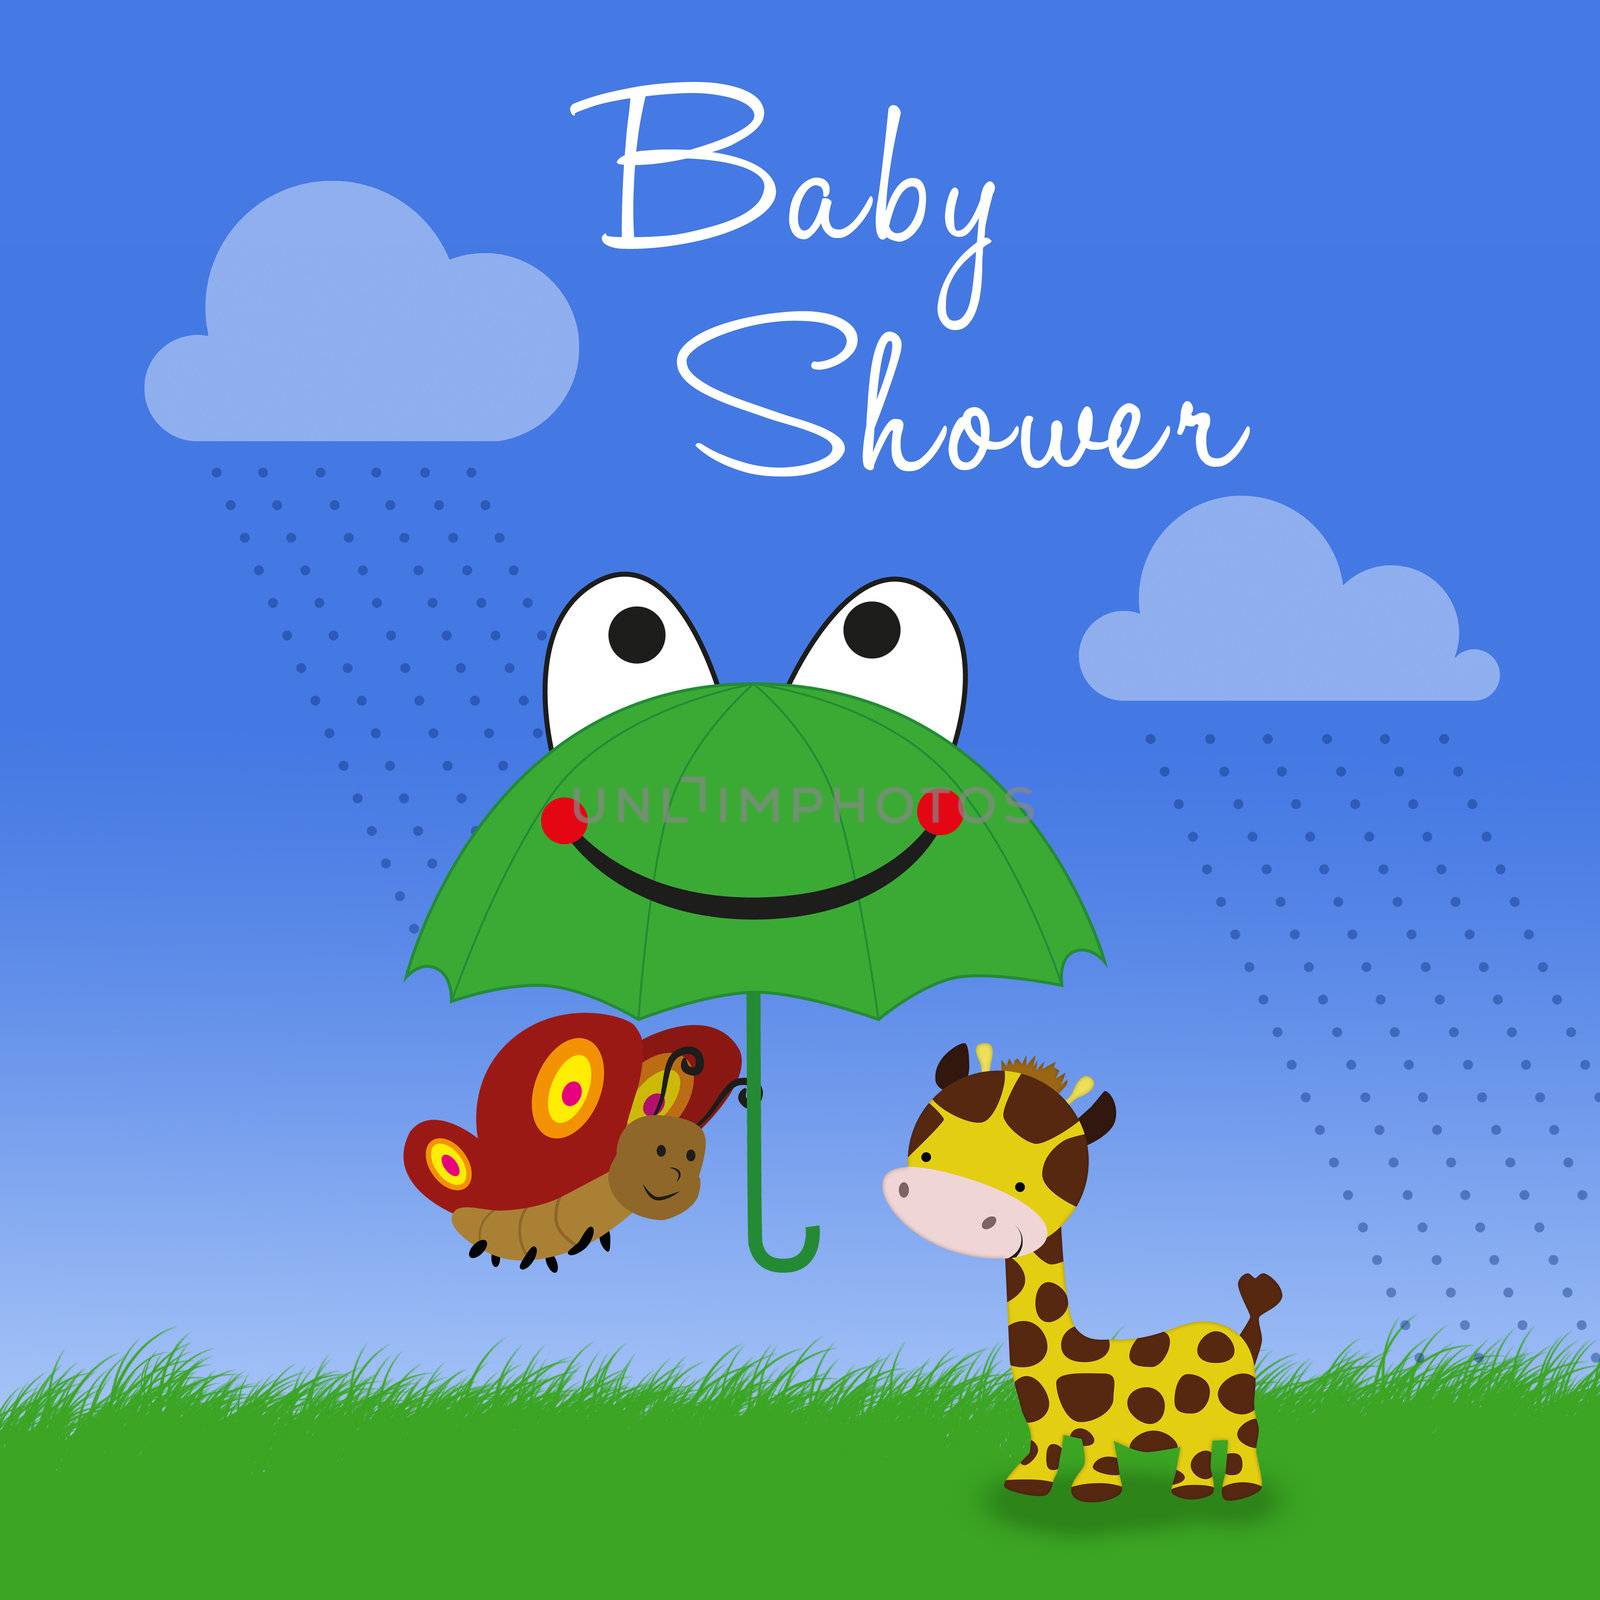 Giraffe and Butterfly Baby Shower by SorayaShan